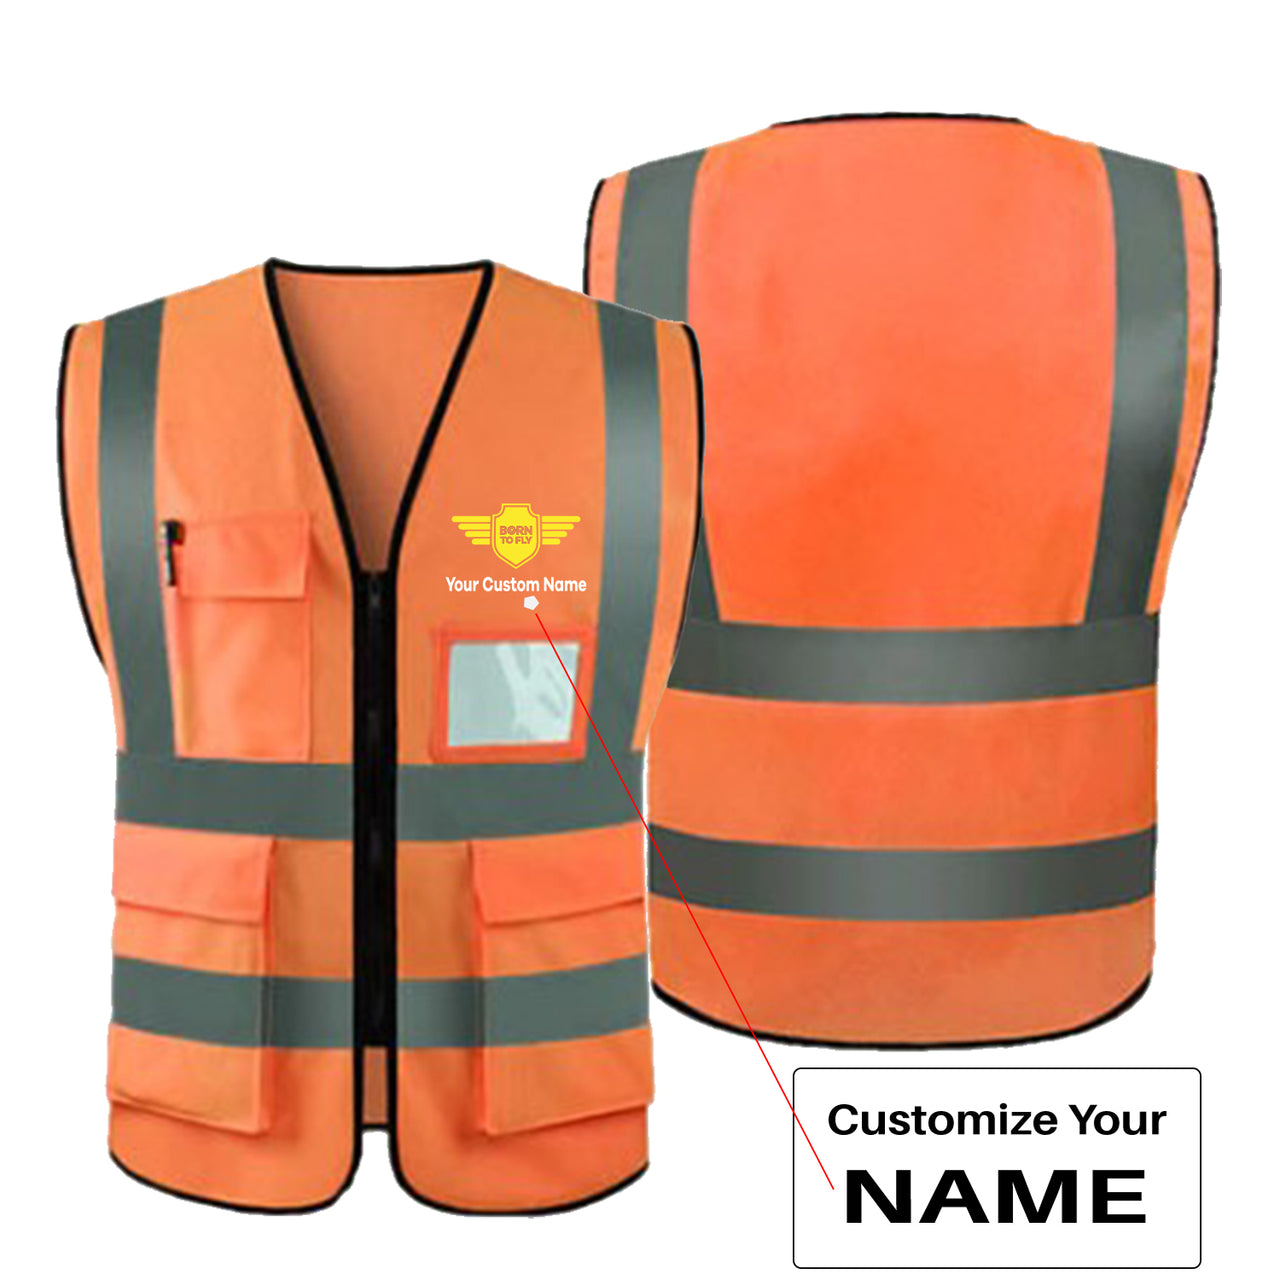 Custom Name with Badge 5 Designed Reflective Vests